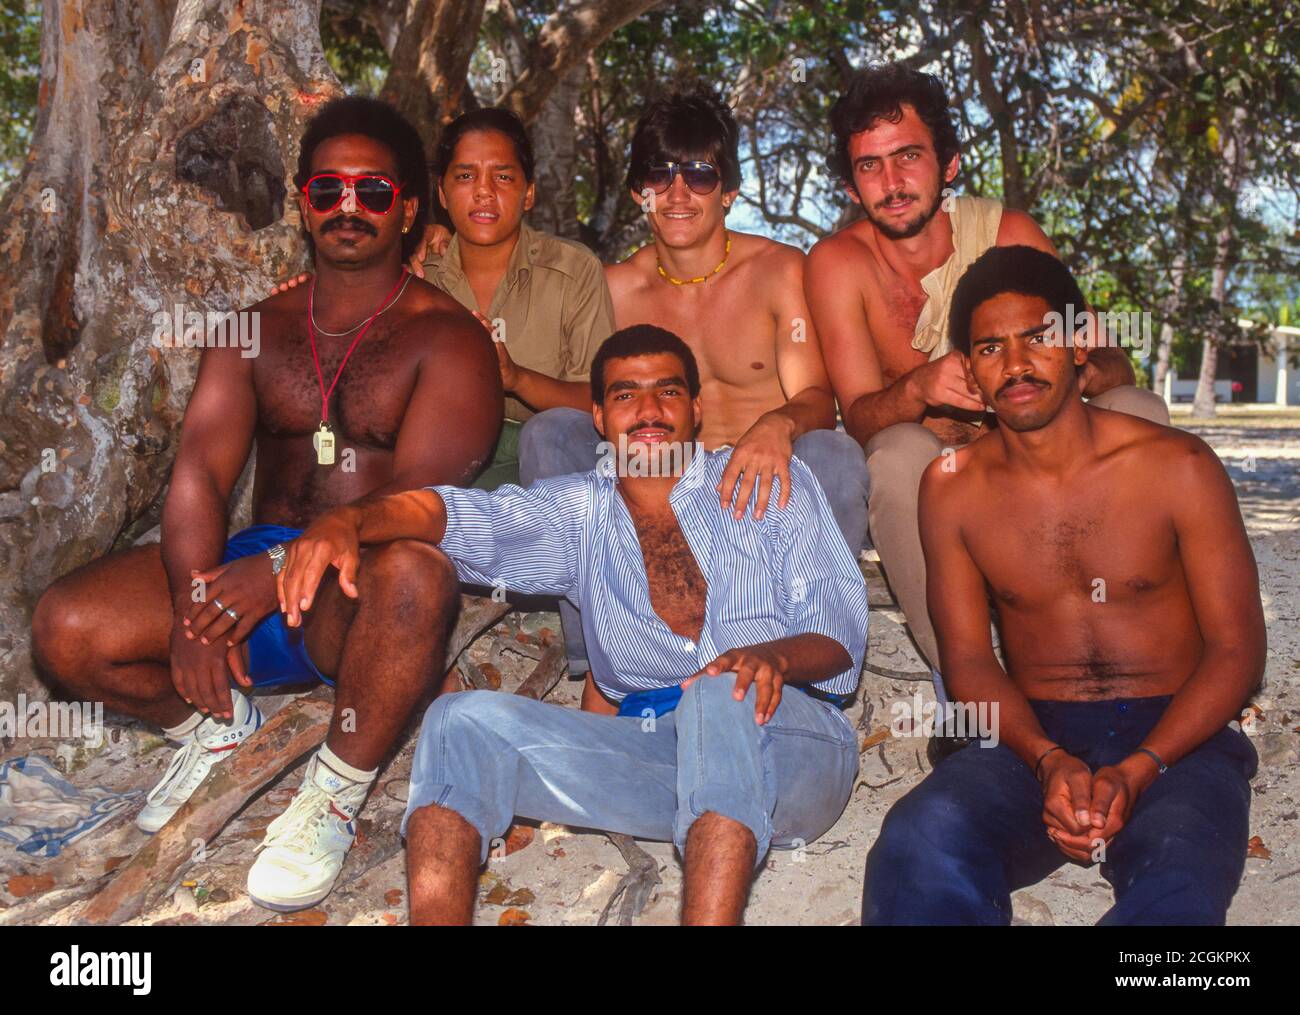 PLAYA GIRON, KUBA - Gruppe von kubanischen Freunden am Strand Playa Giron. Stockfoto